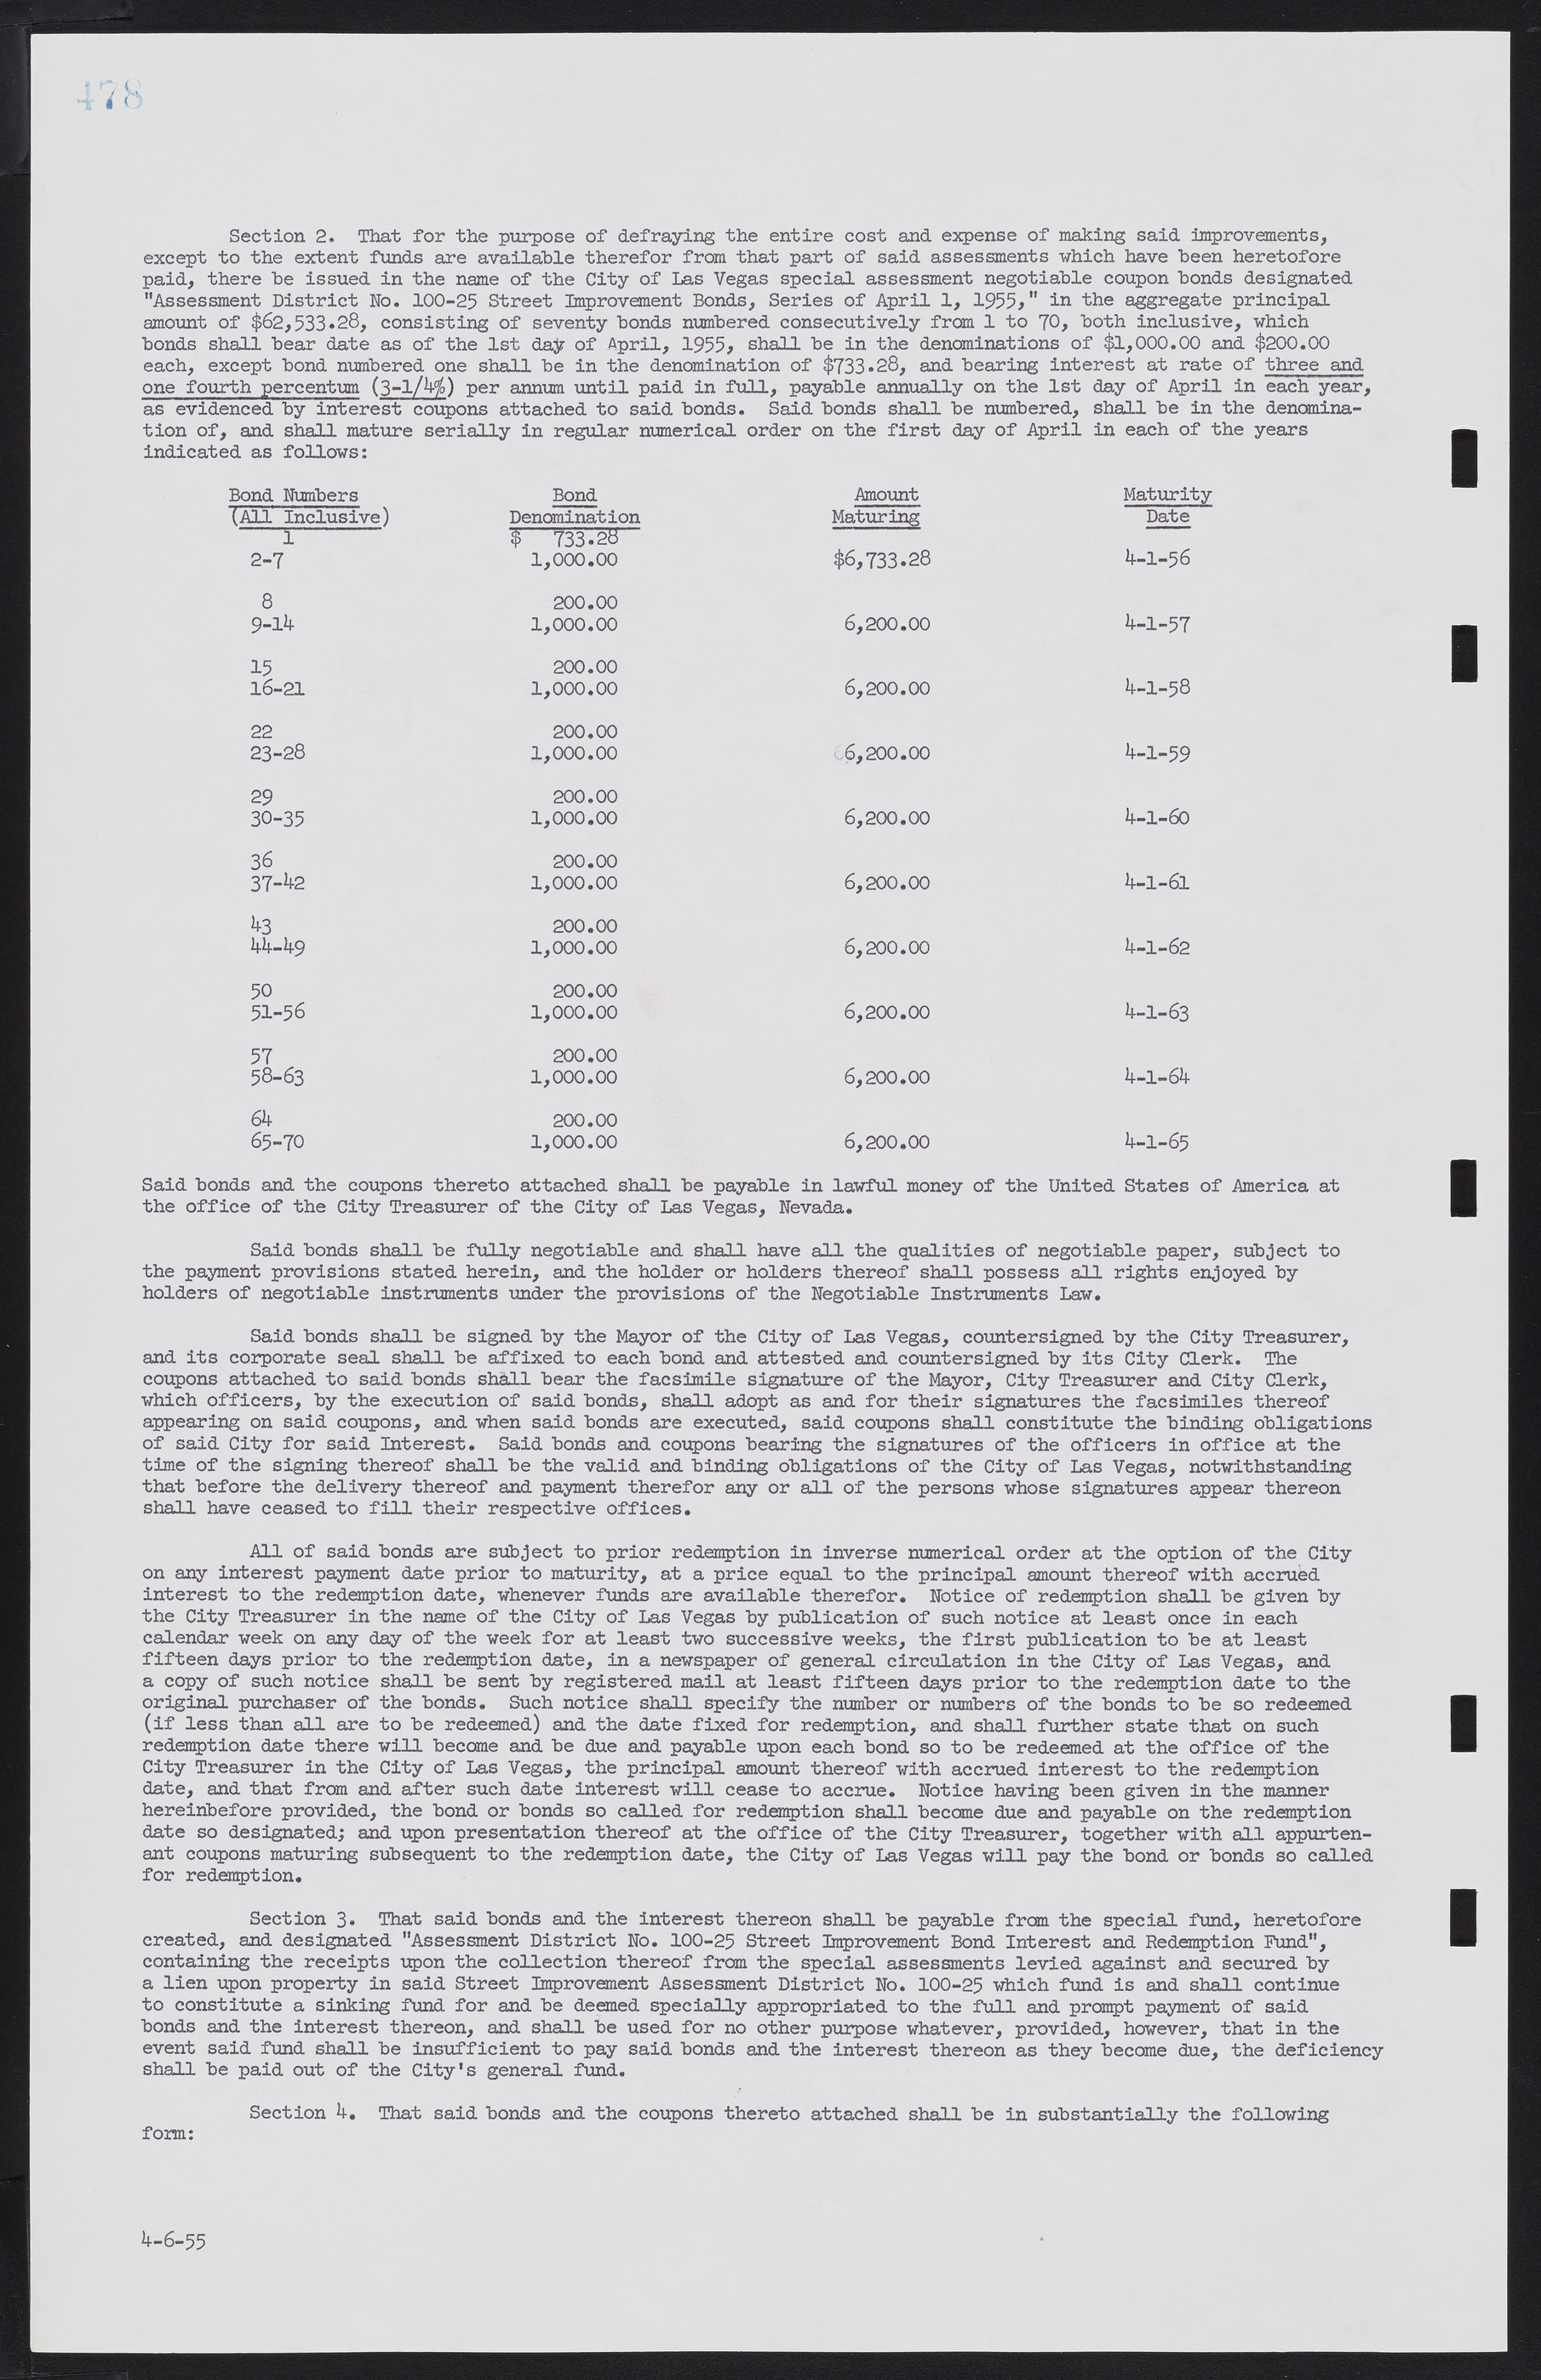 Las Vegas City Commission Minutes, February 17, 1954 to September 21, 1955, lvc000009-484